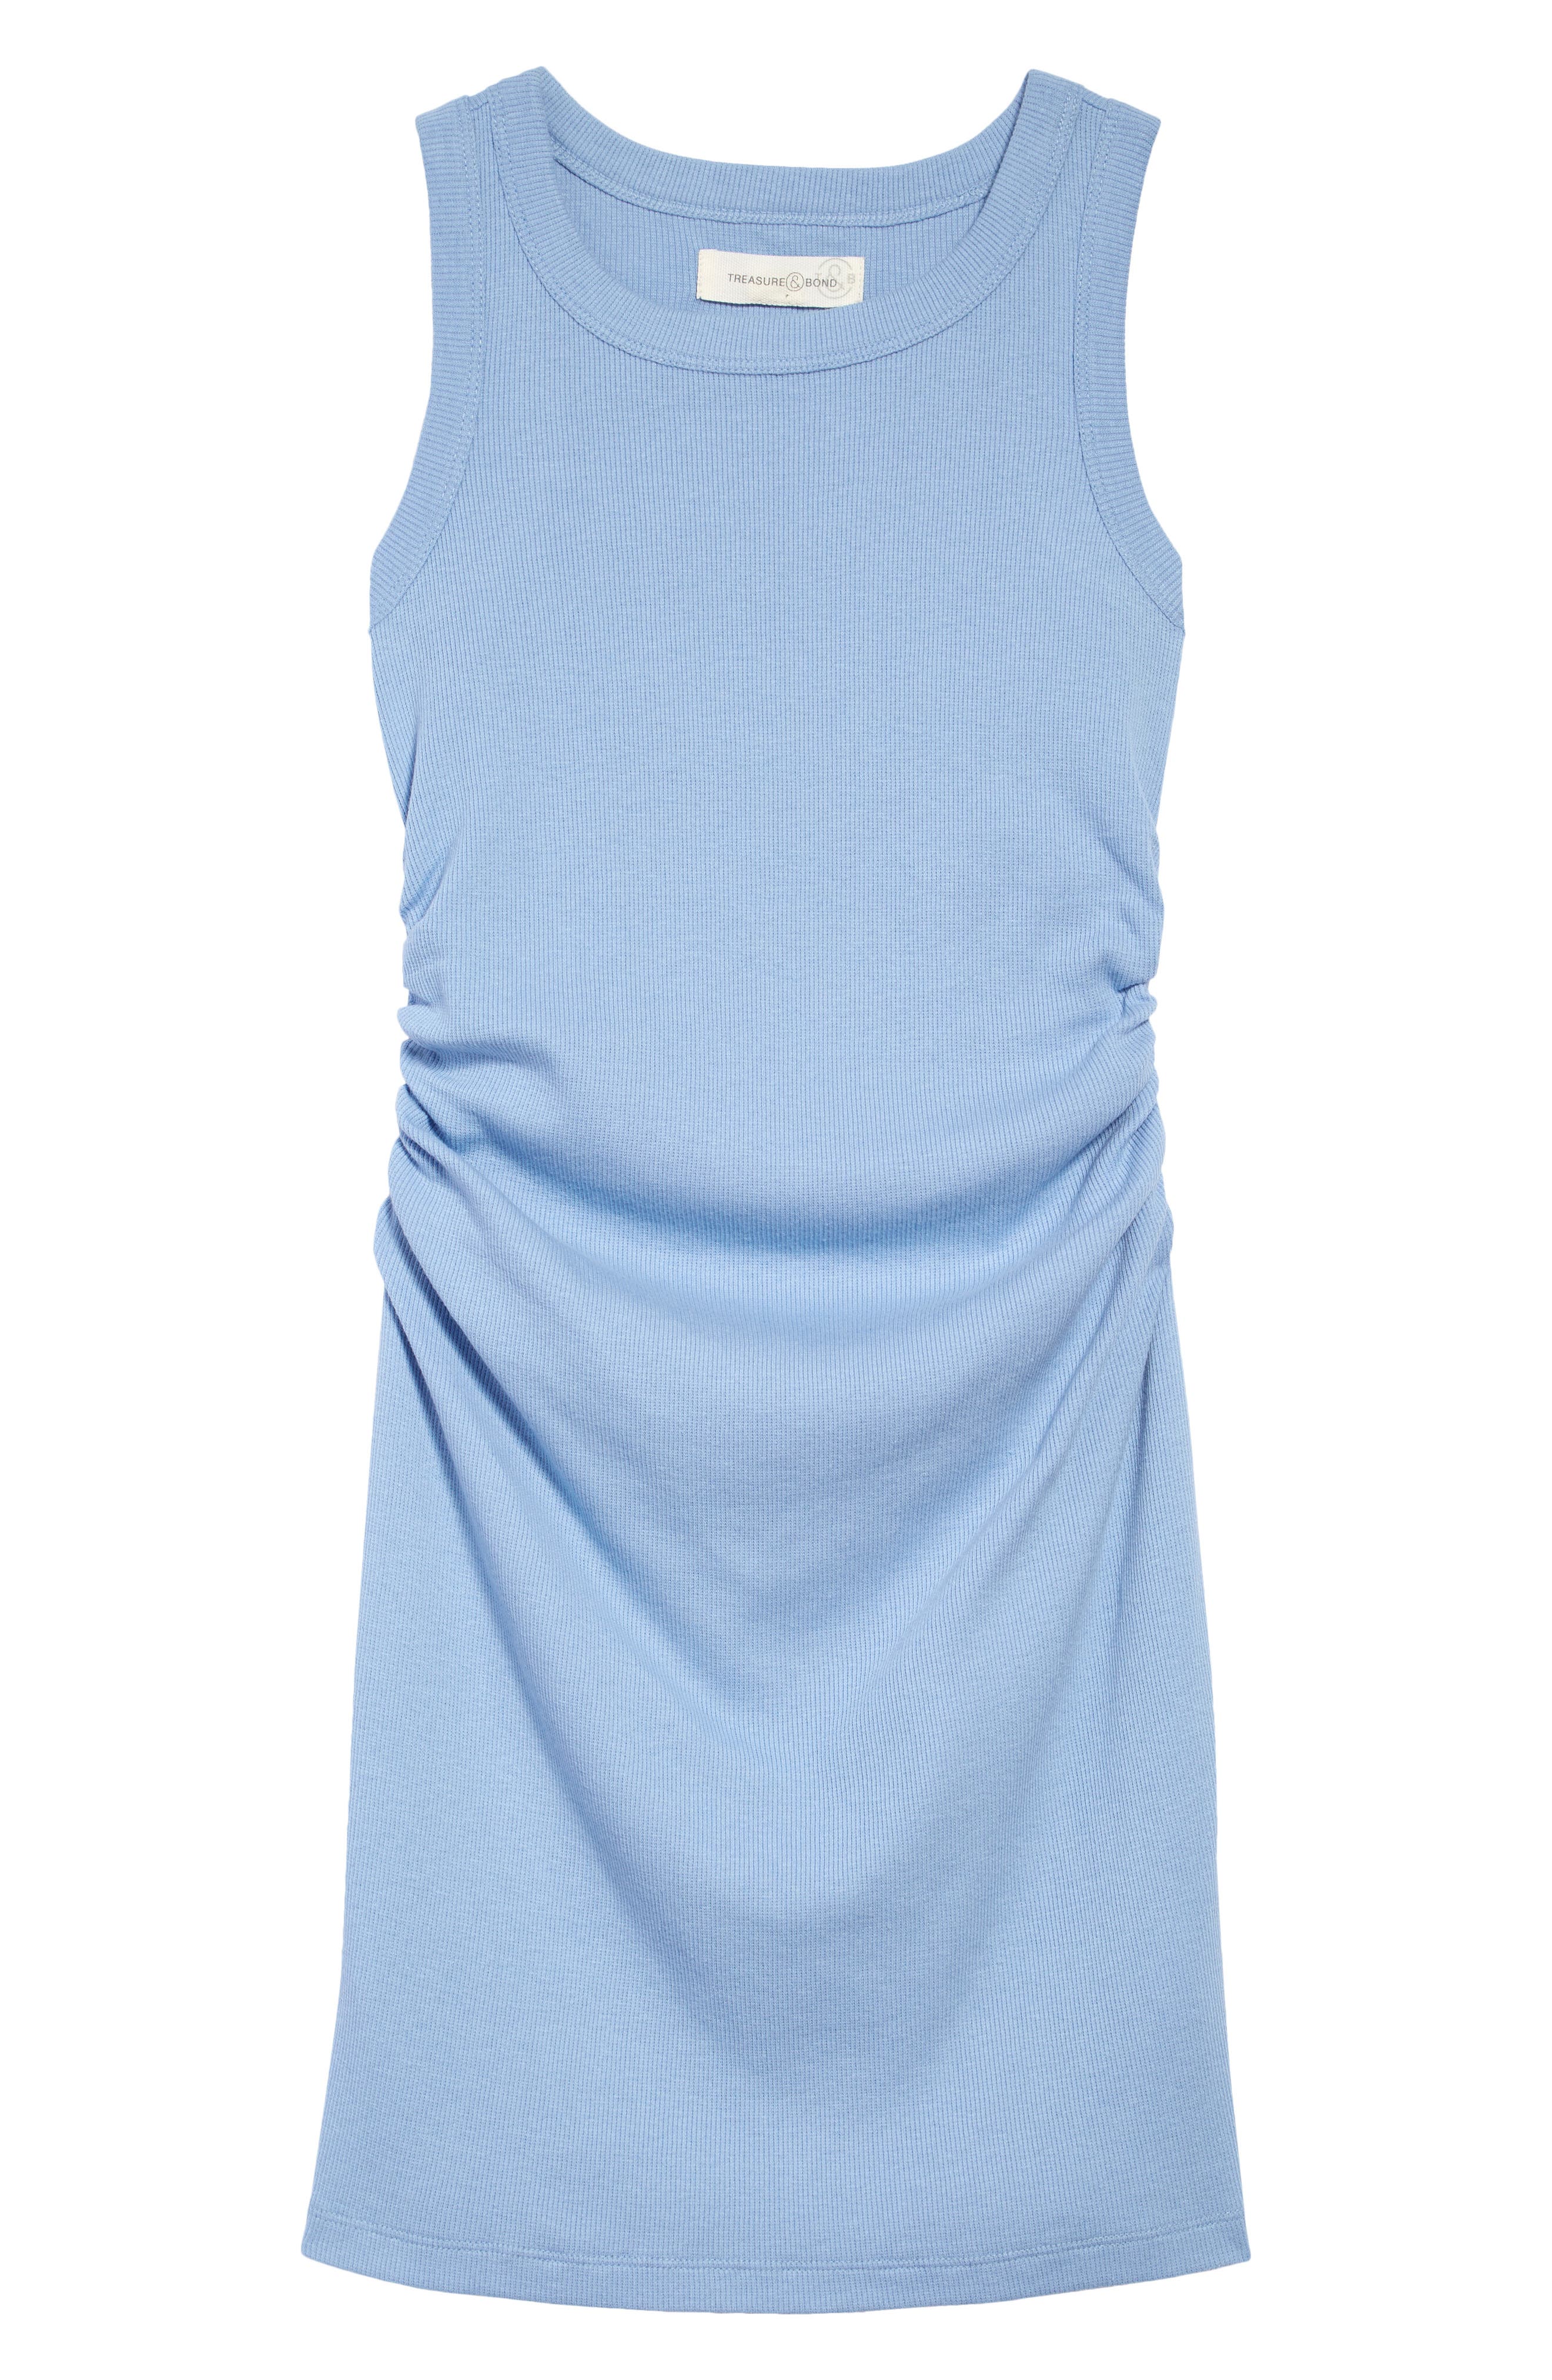 Girls' Blue Dresses ☀ Rompers | Nordstrom